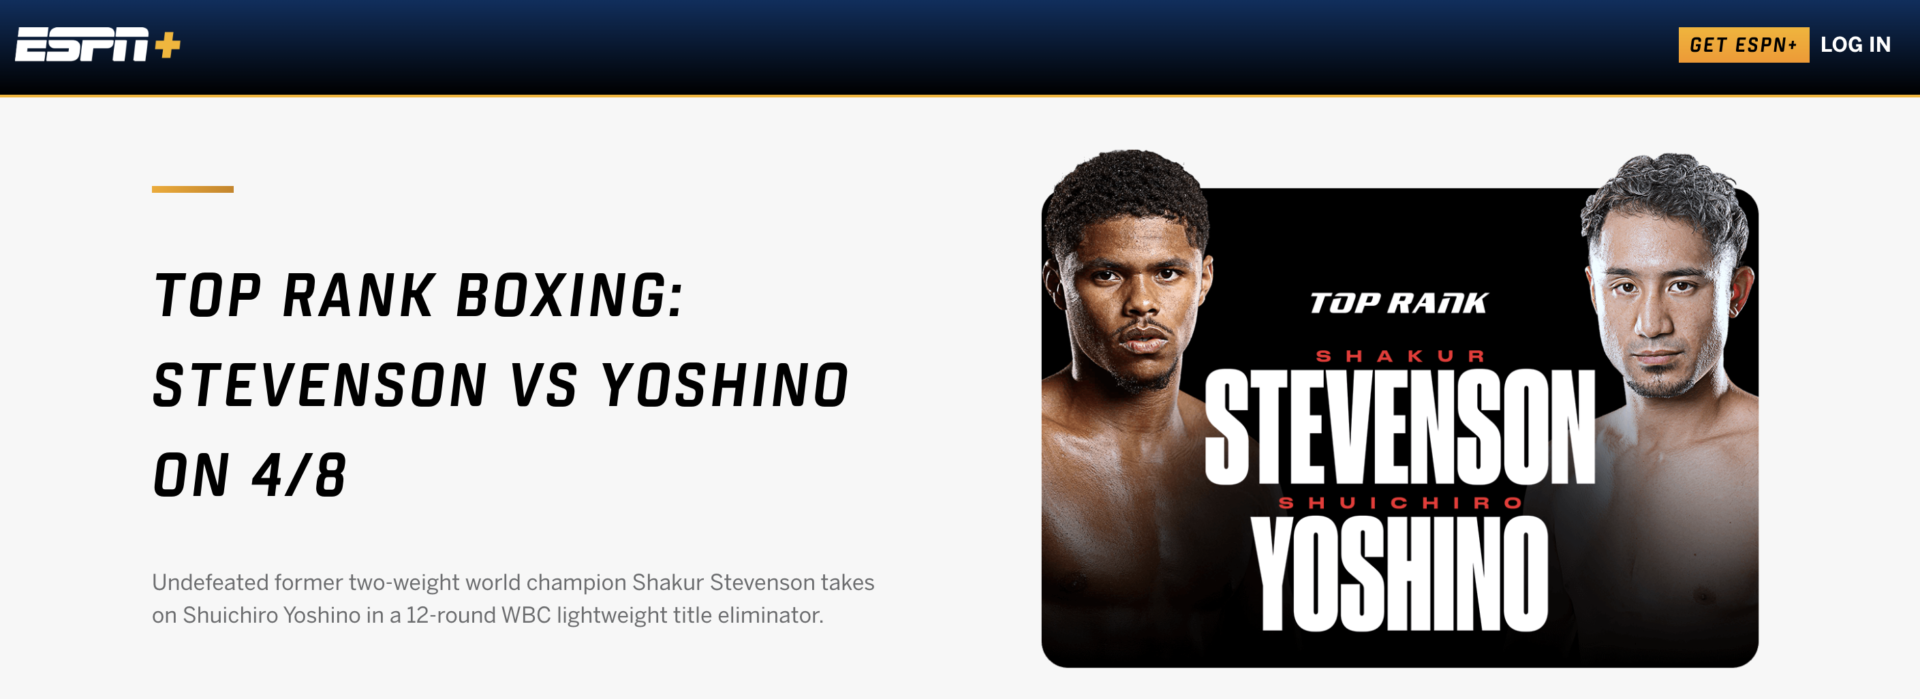 How to Stream Shakur Stevenson vs. Shuichiro Yoshino ESPN Plus